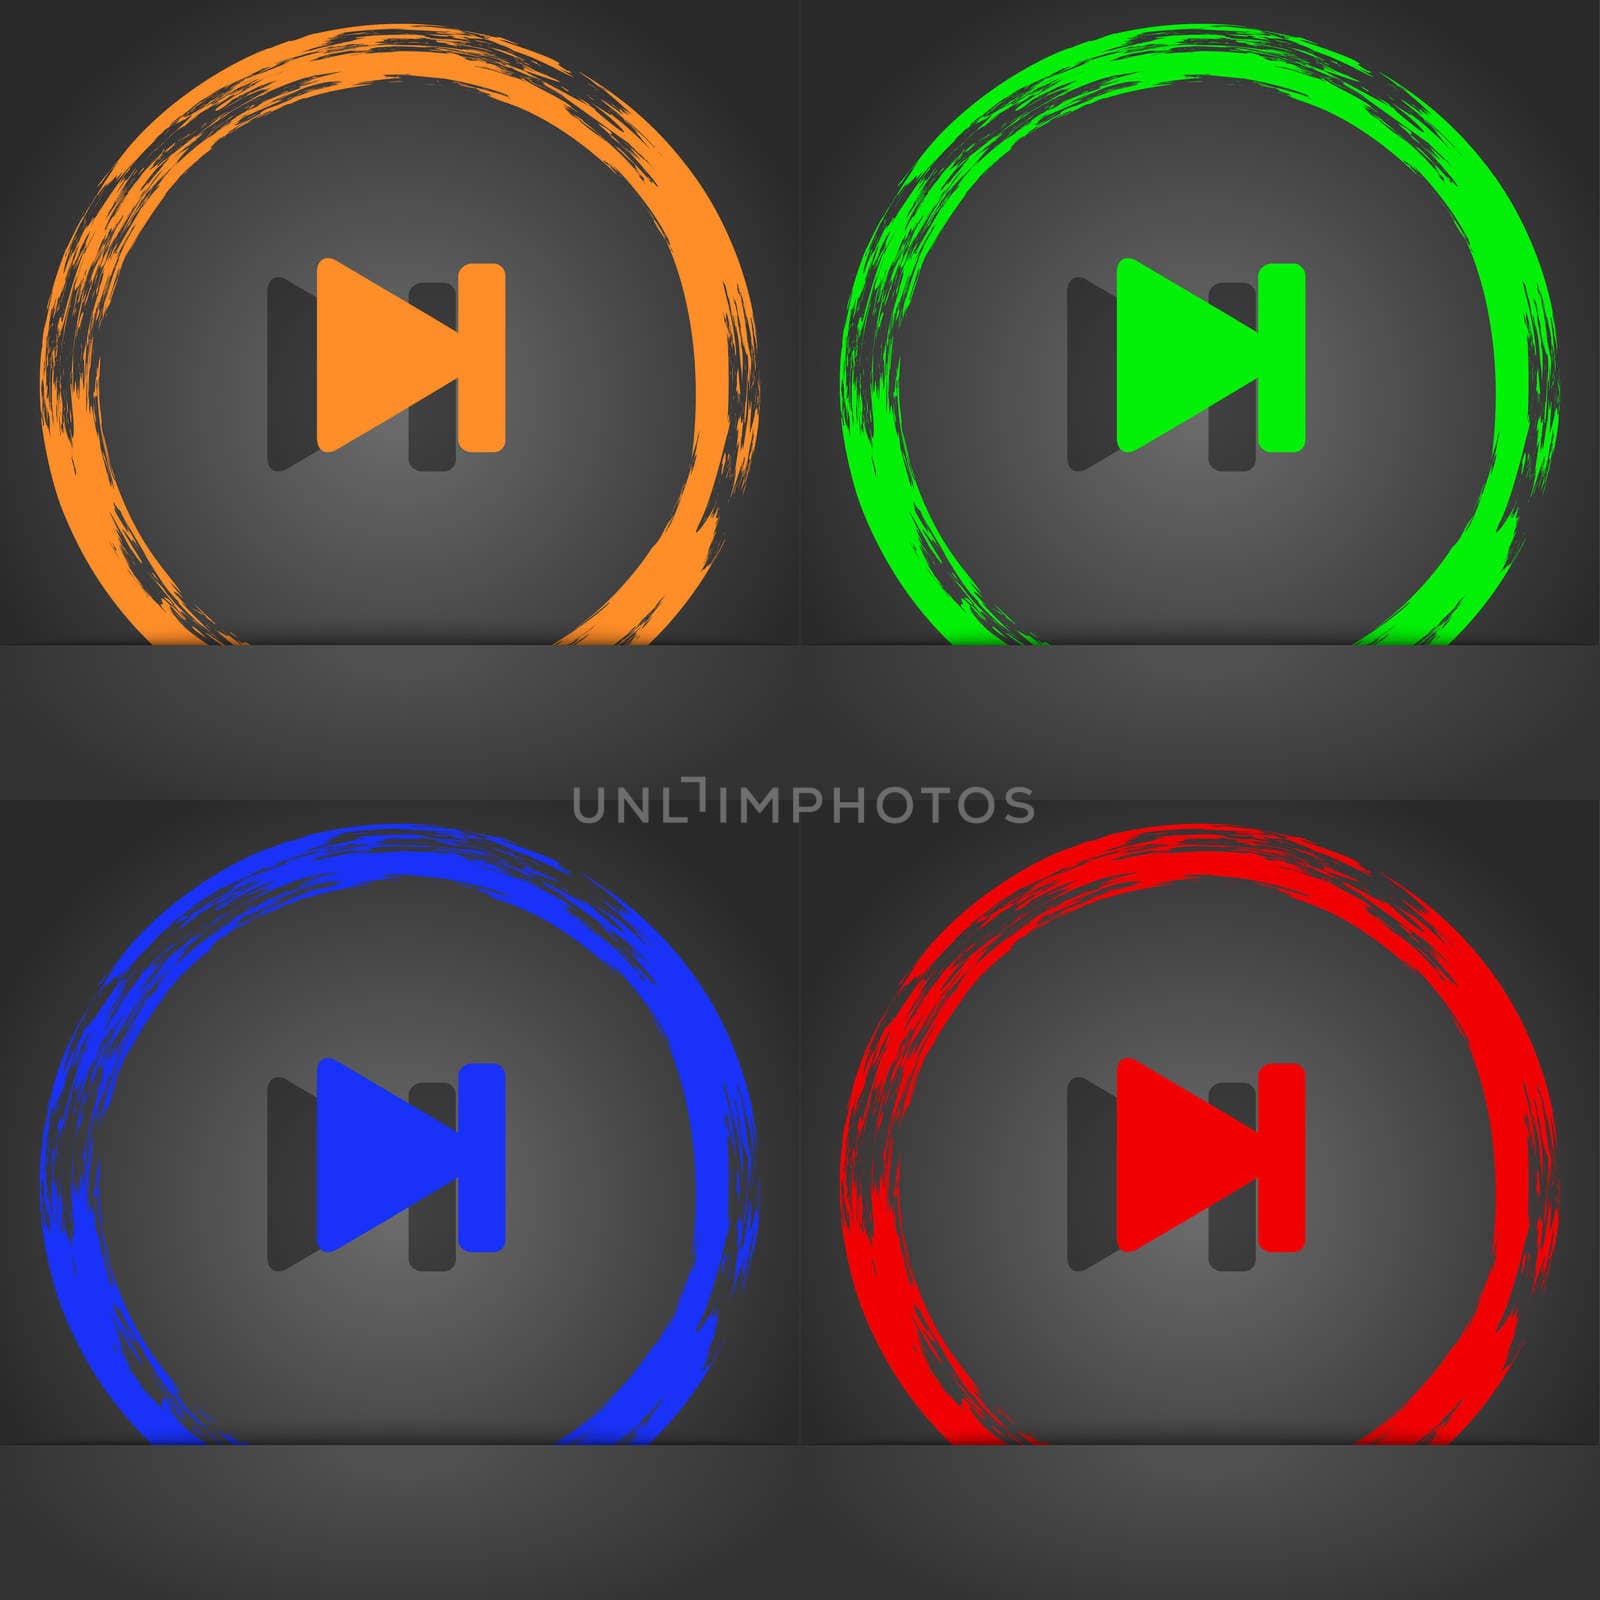 next track icon symbol. Fashionable modern style. In the orange, green, blue, green design. illustration